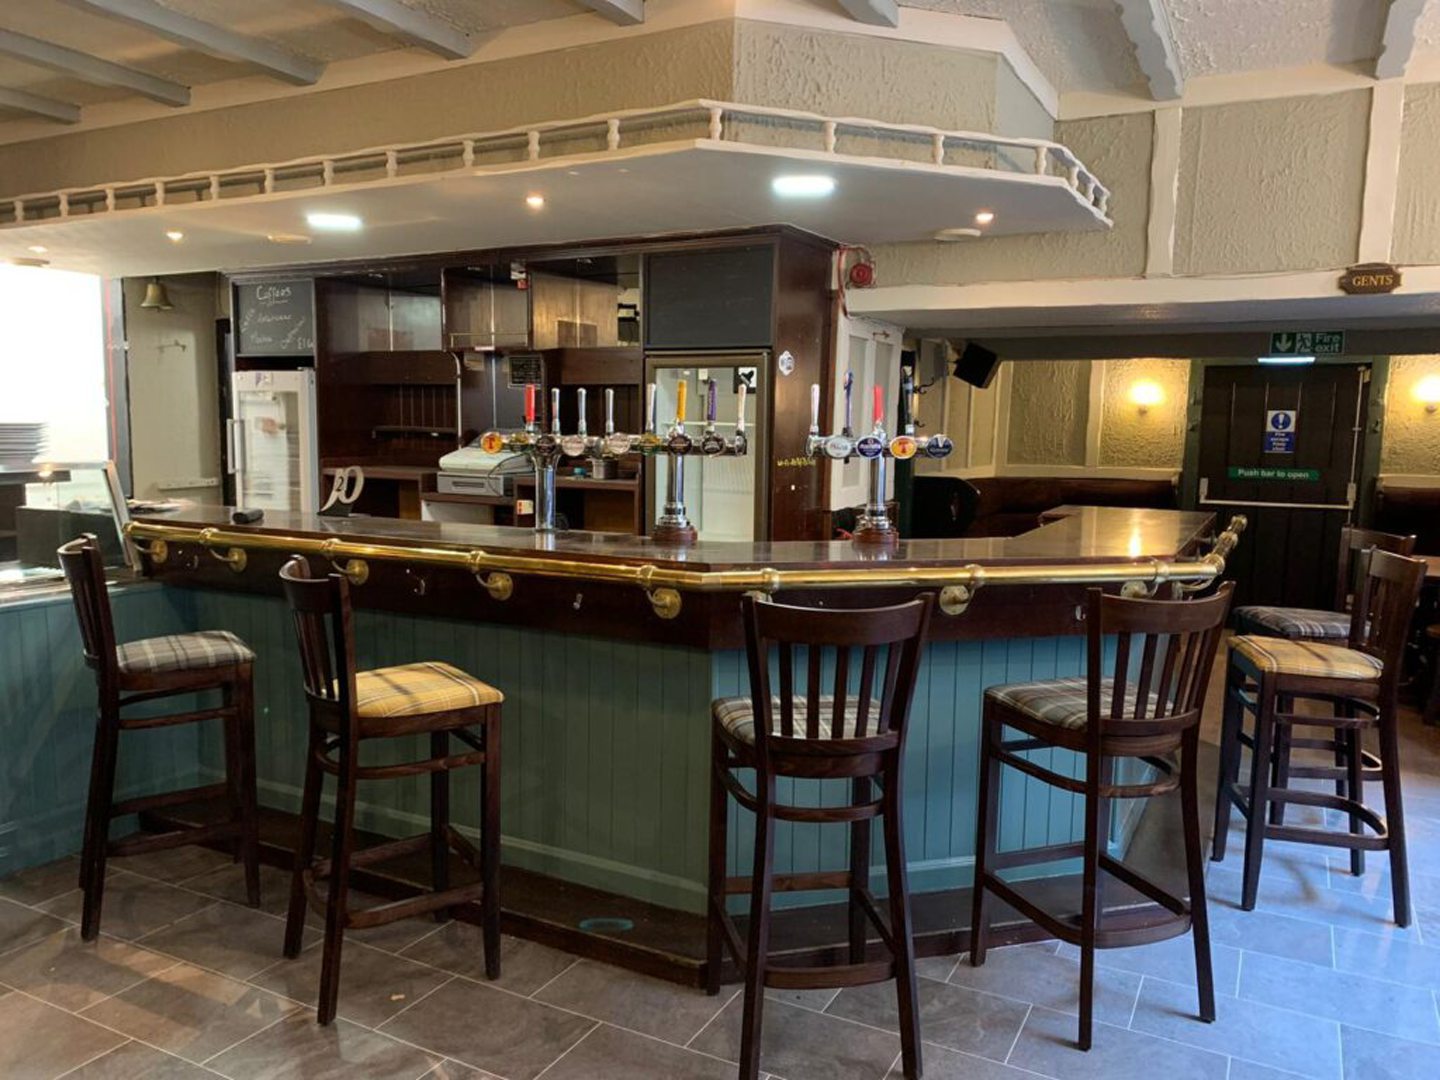 The bar area of Wheatsheaf Inn.